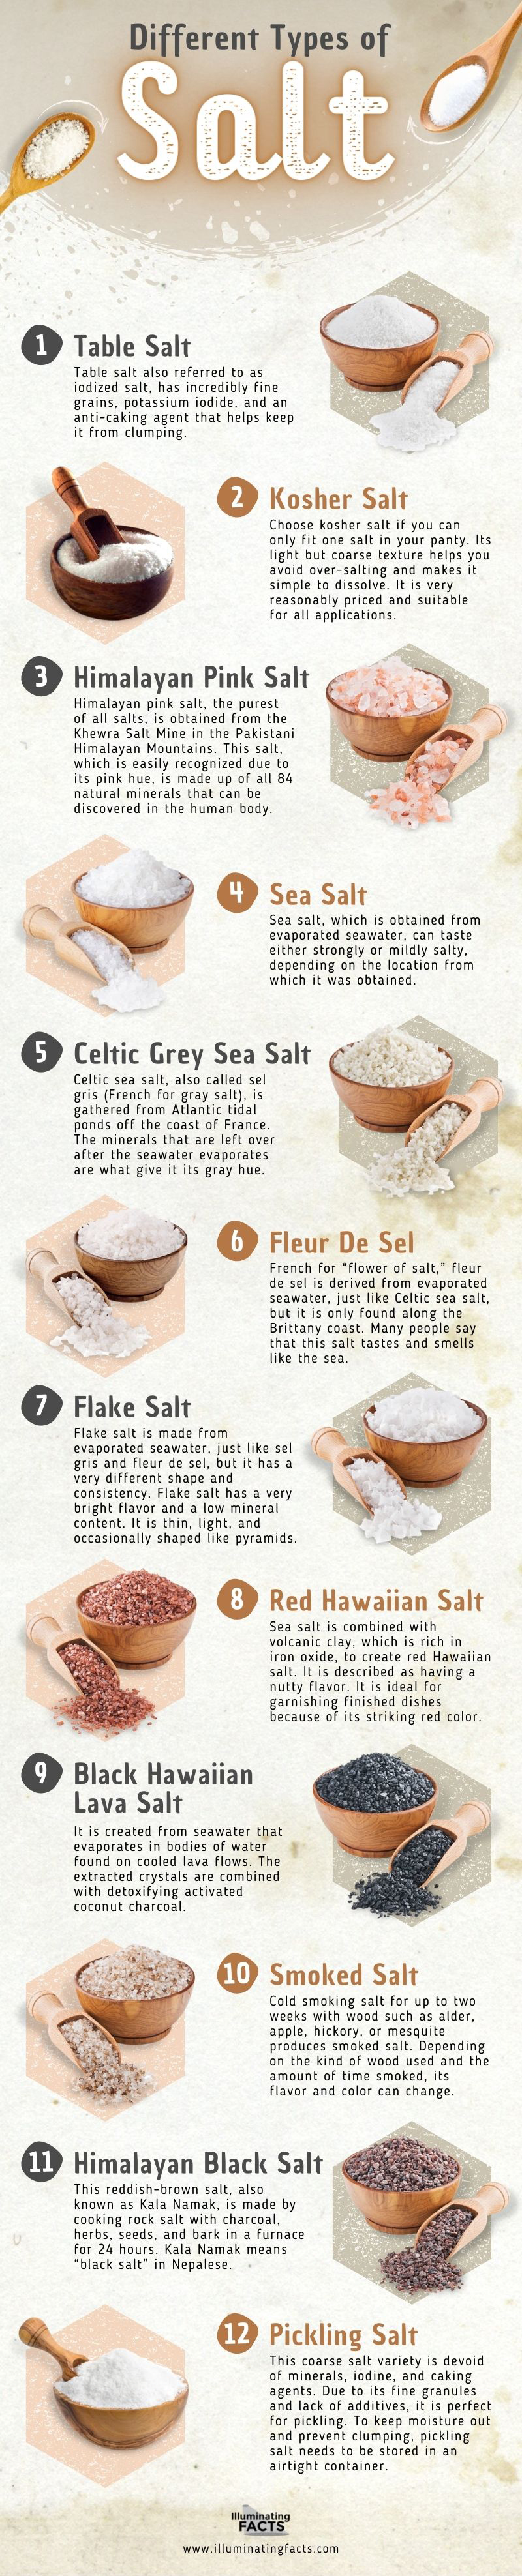 Different Types of Salt